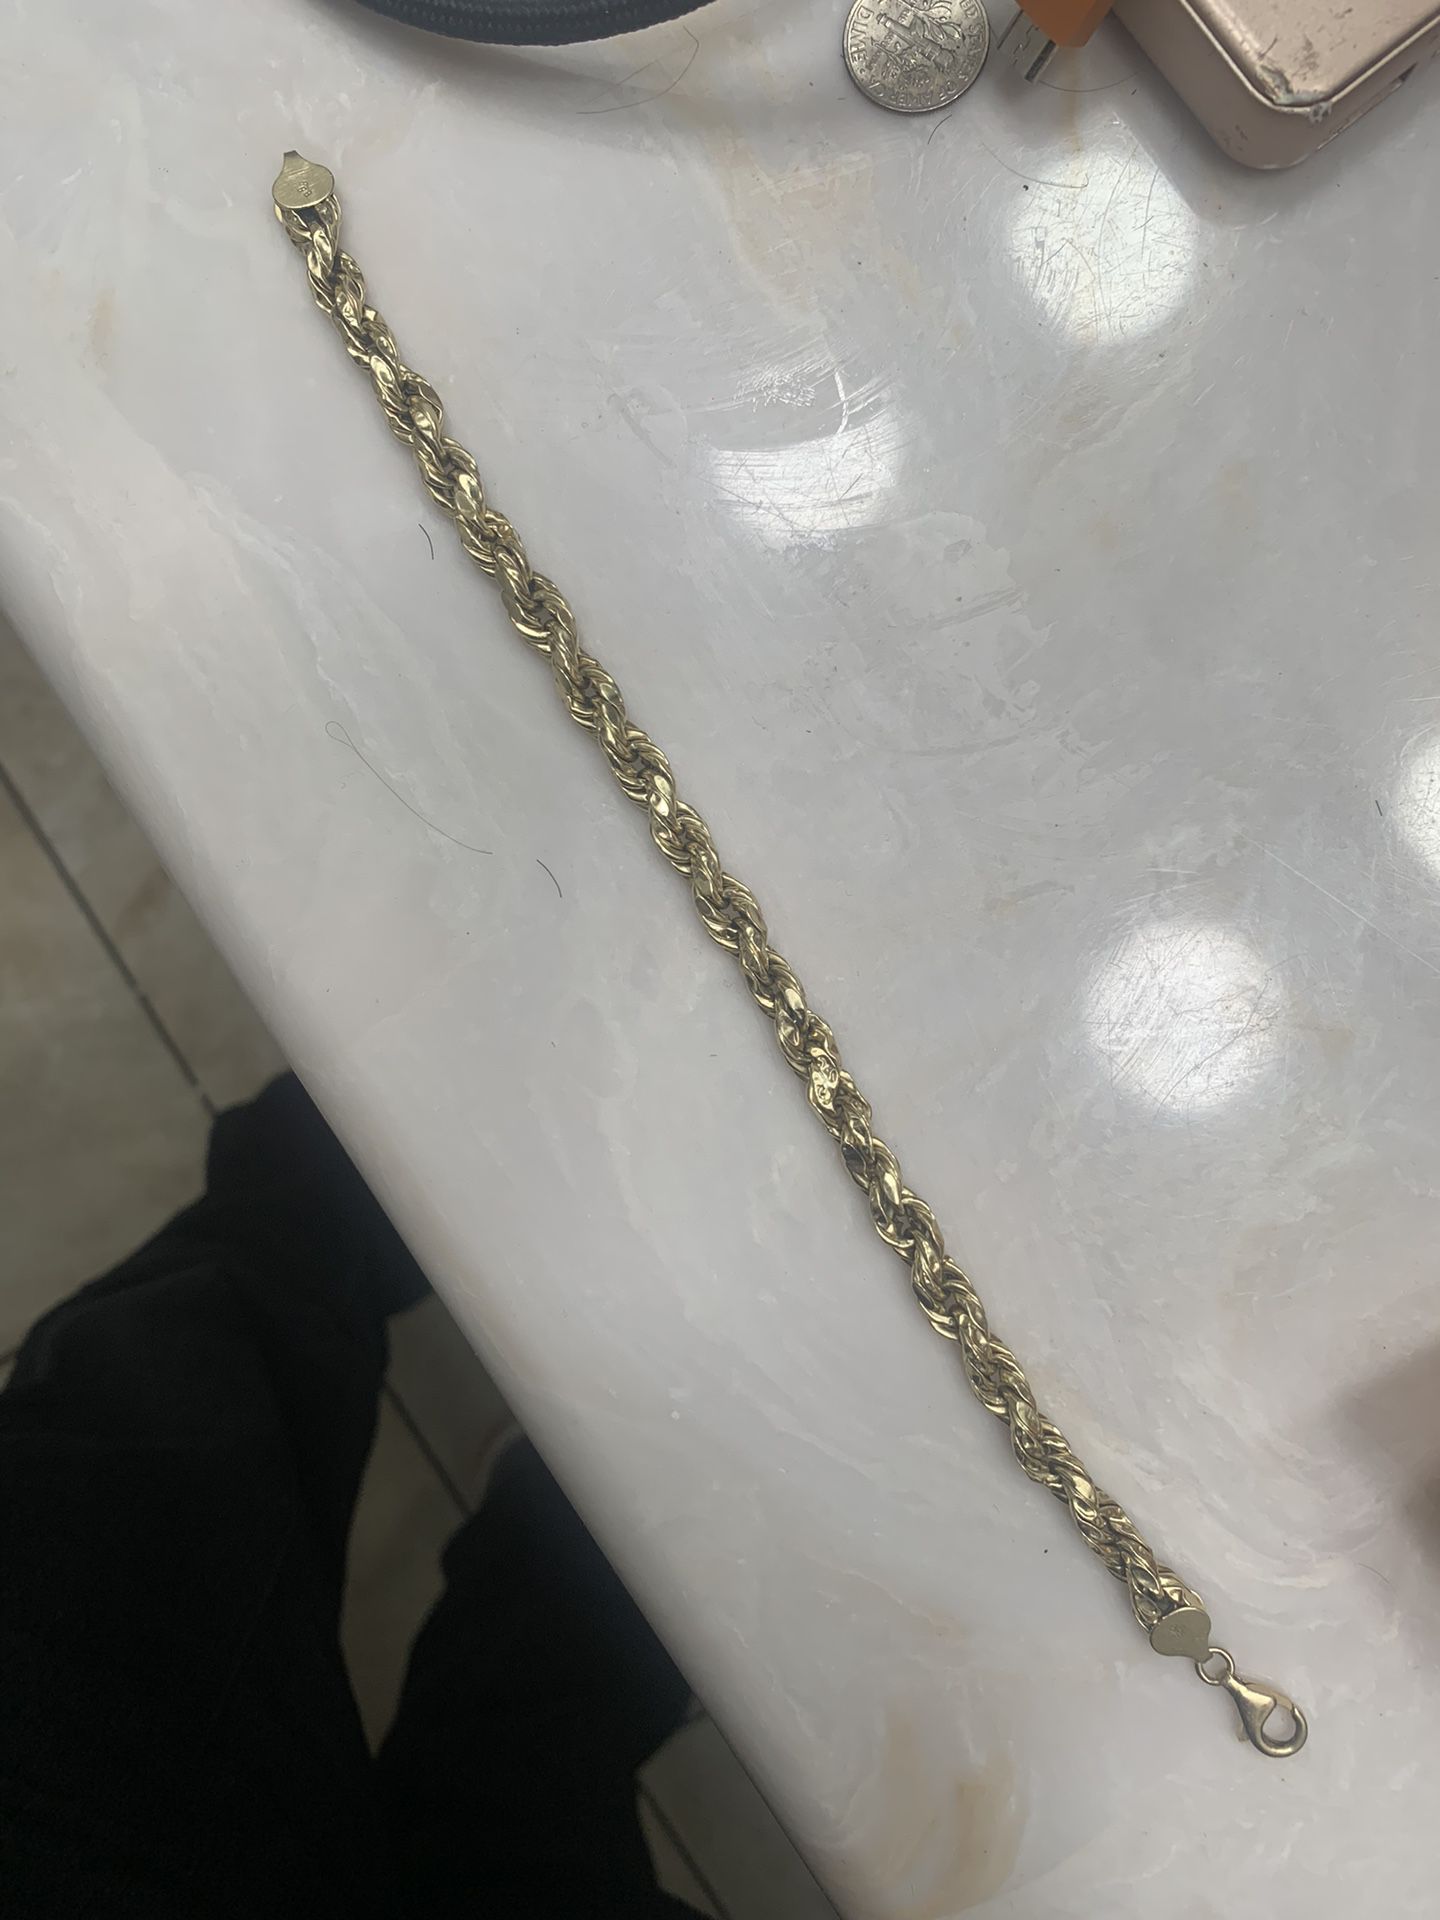 10k Gold Rope Bracelet 